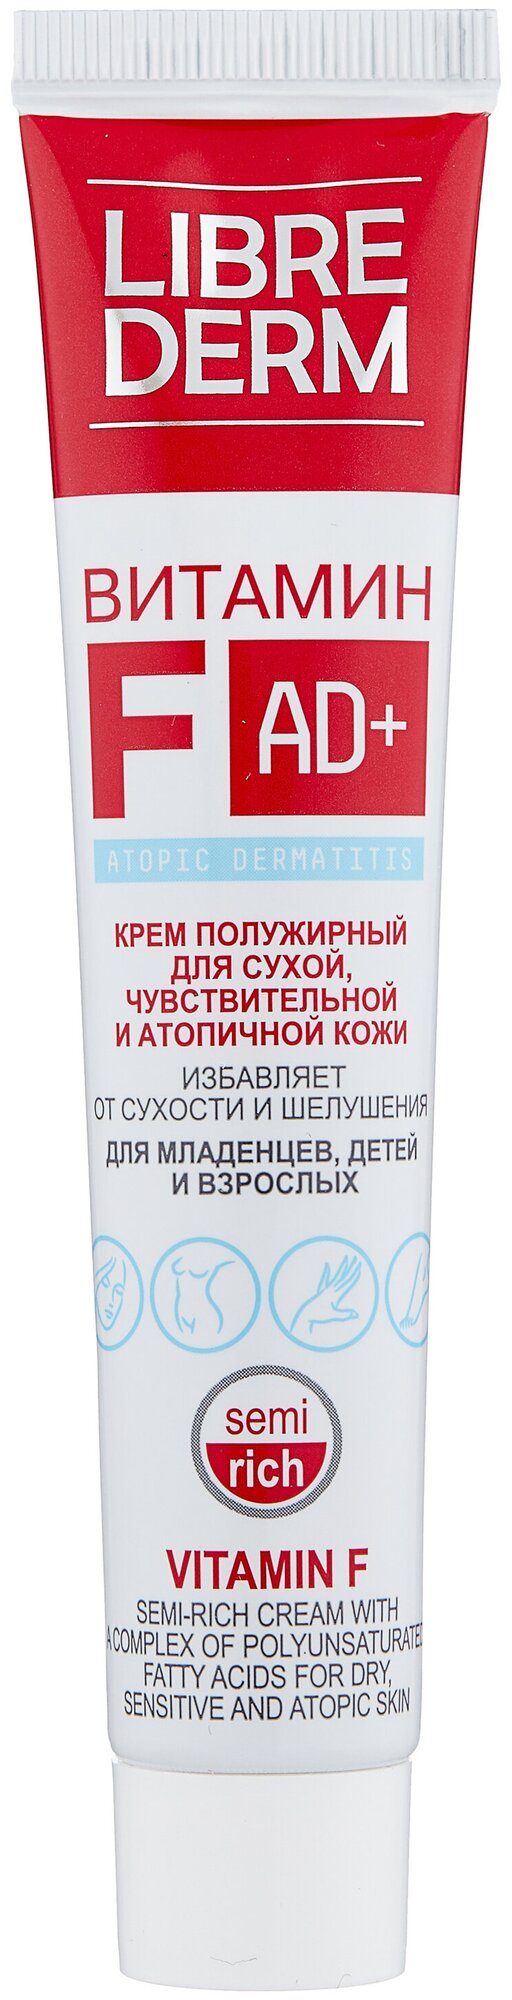 Librederm Vitamin F Cream Semi-Rich Крем для лица витамин F полужирный